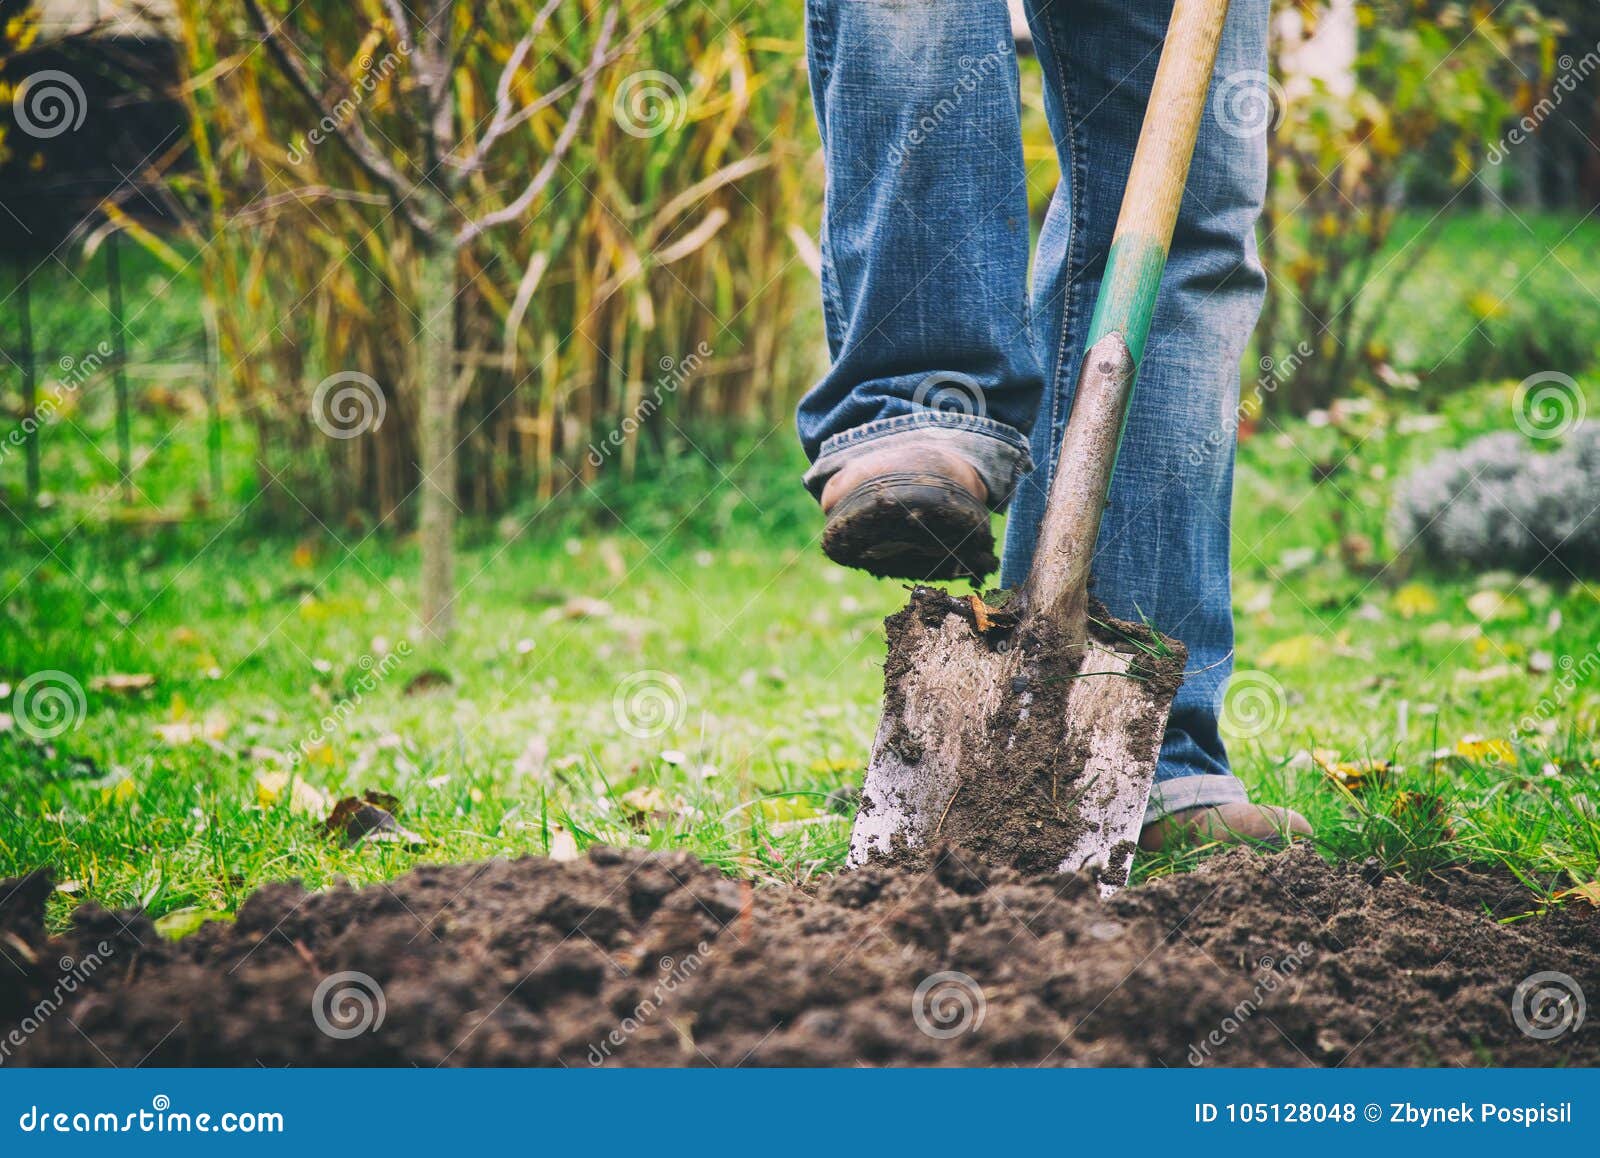 gardener digging in a garden with a spade